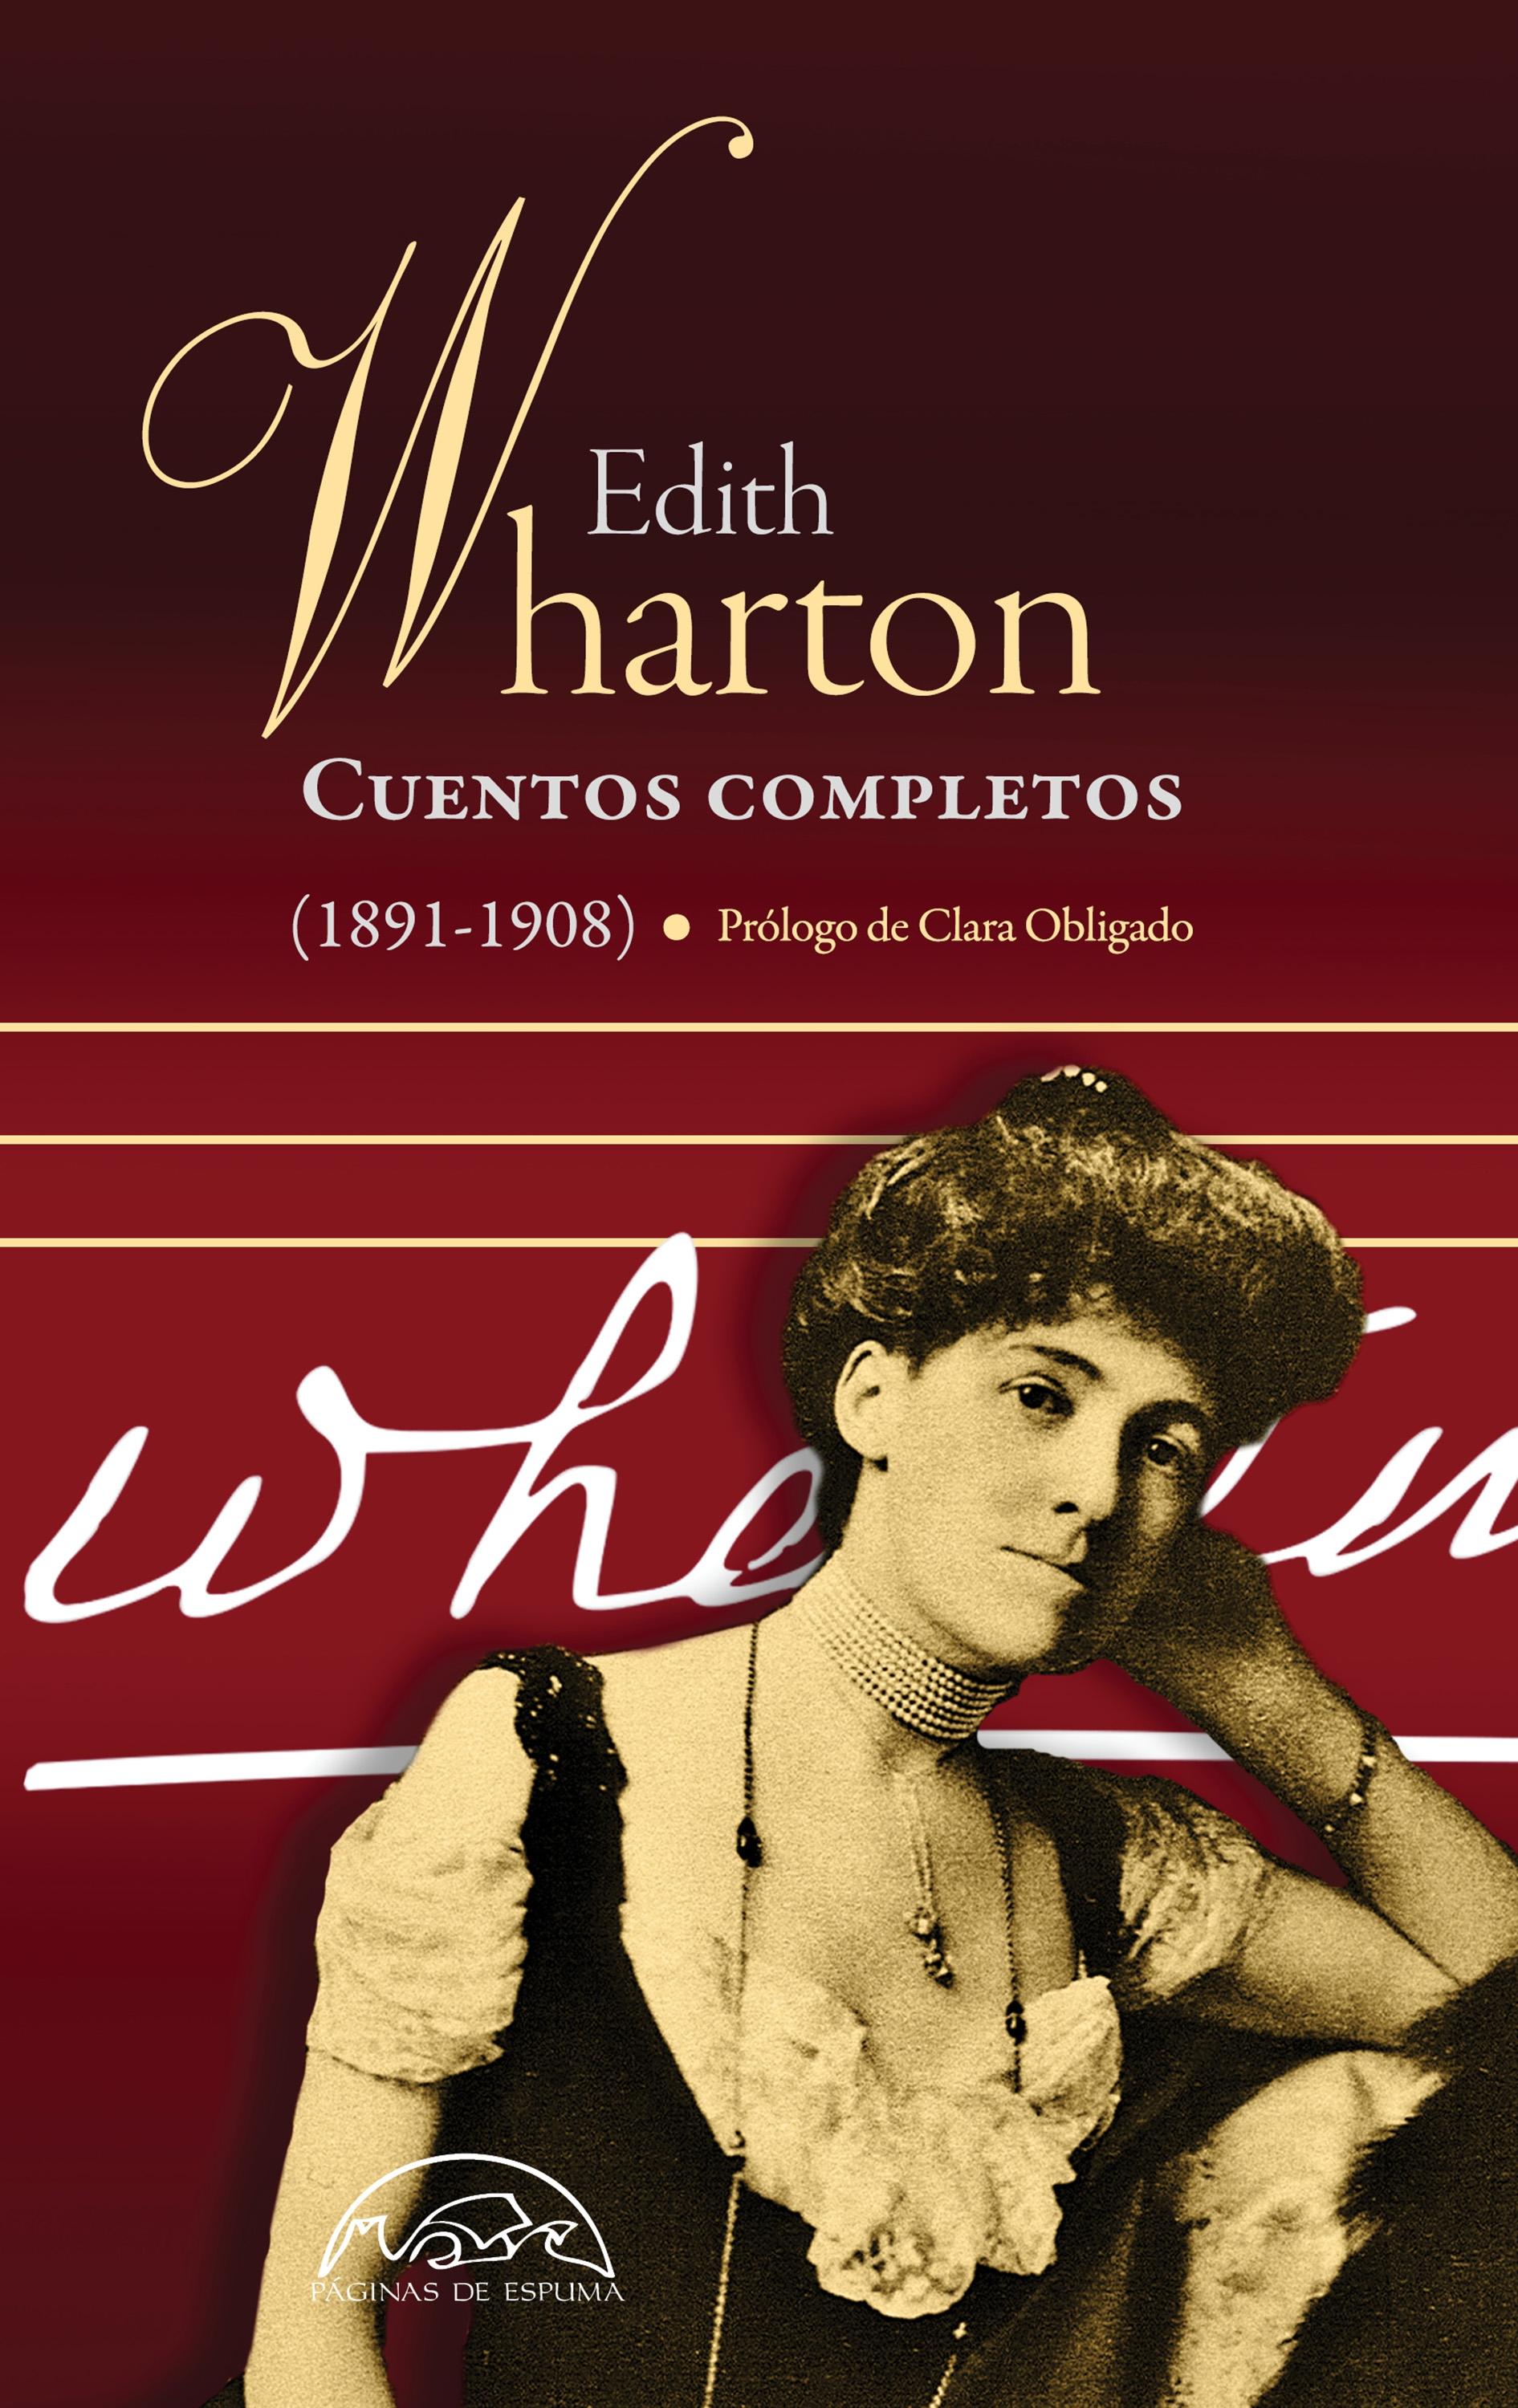 Cuentos completos (1891-1908) "(Tomo I) (Edith Wharton)"